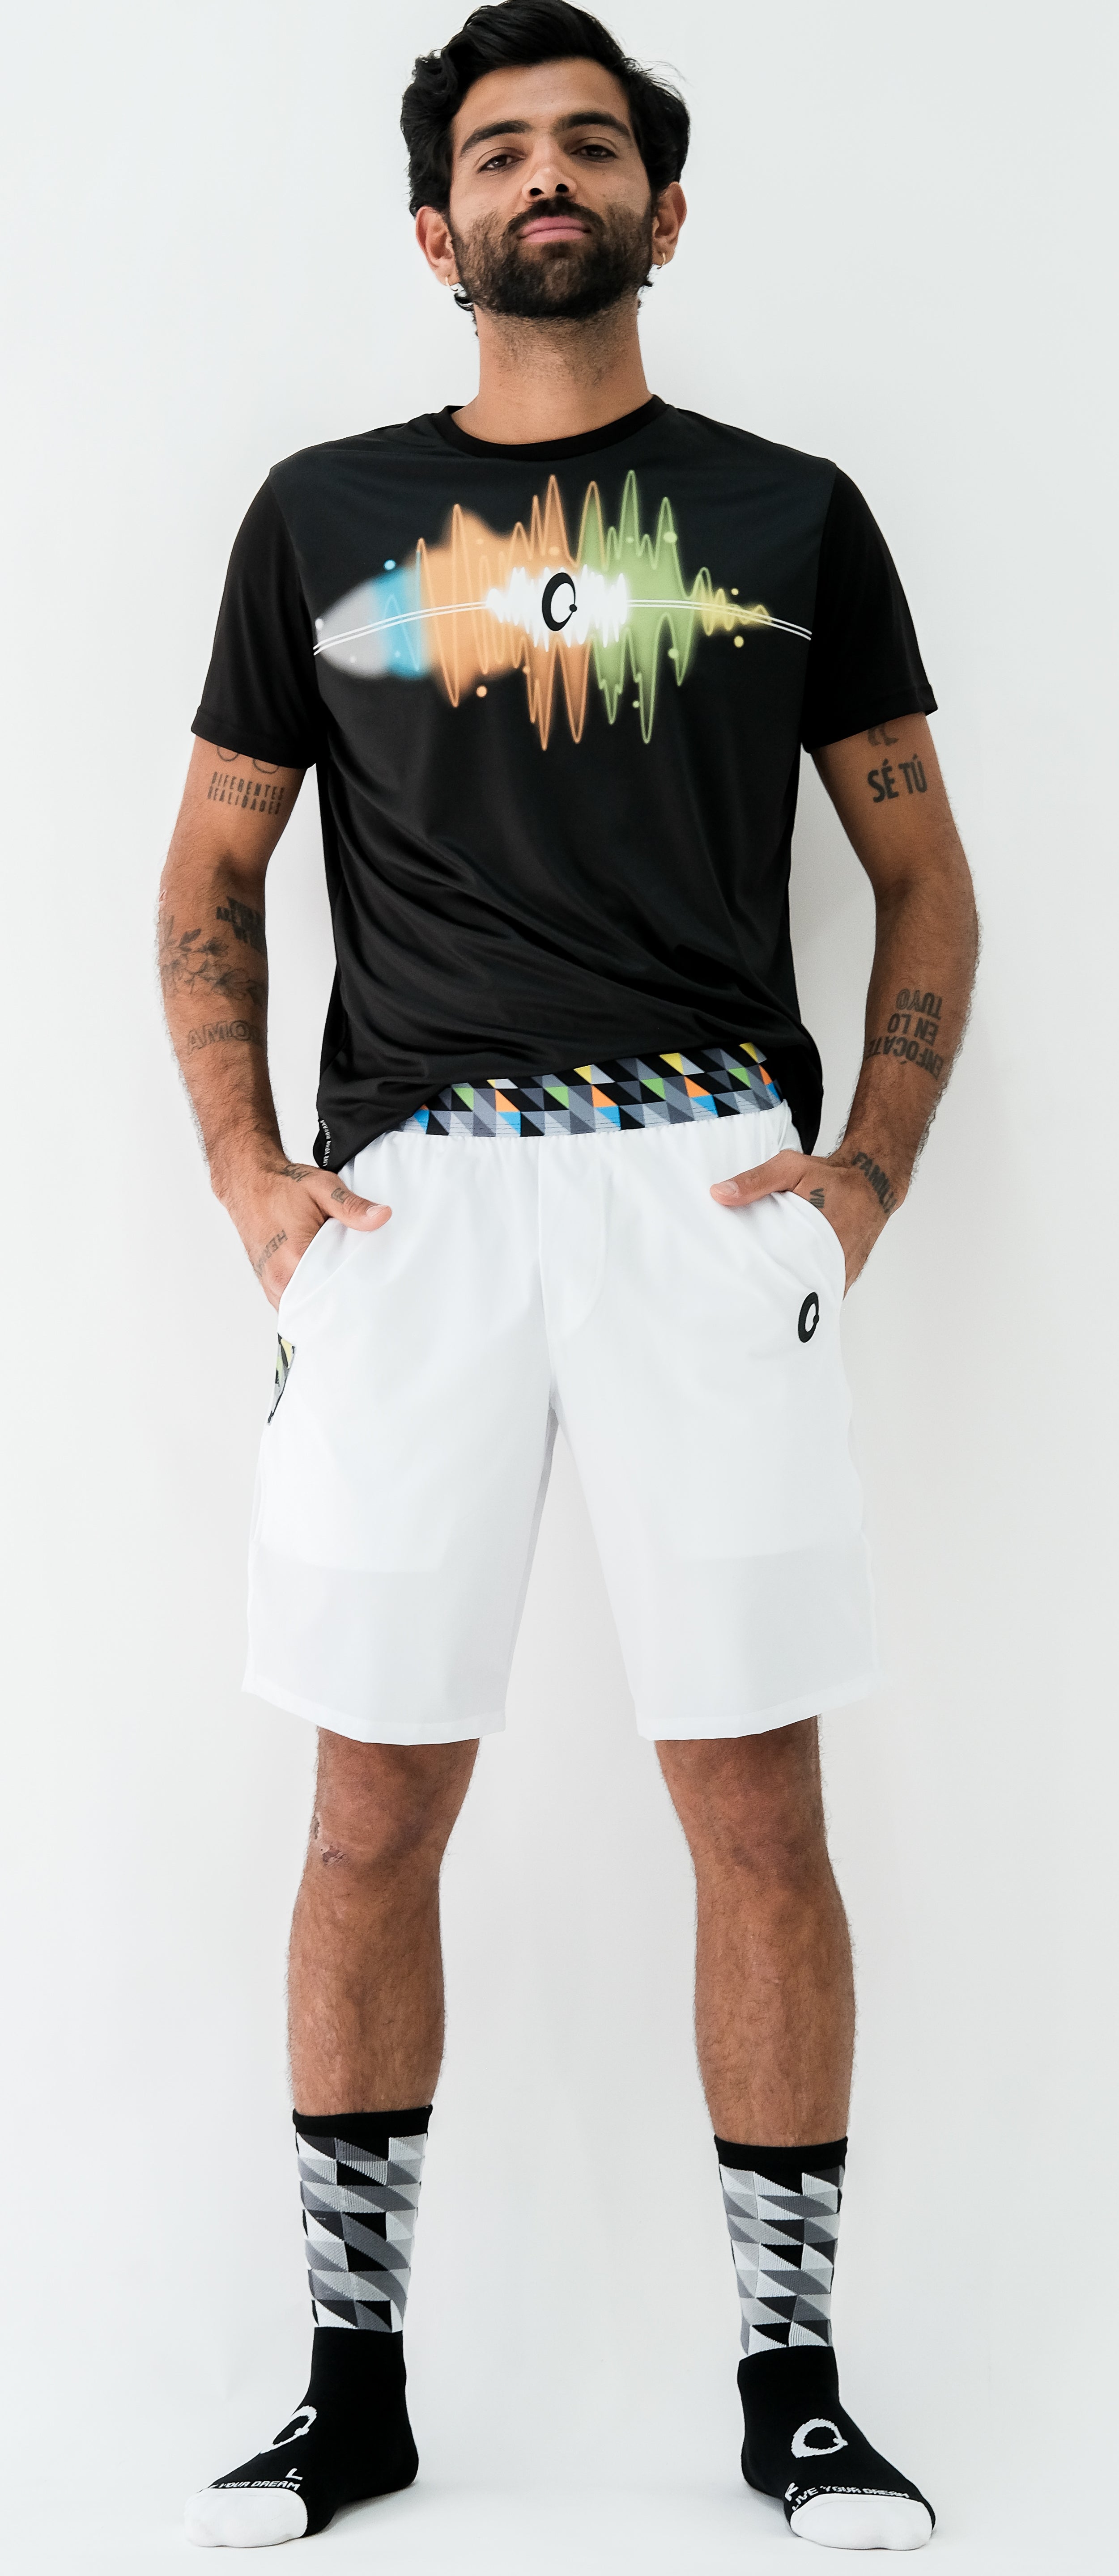 men's white recycled bermuda shorts